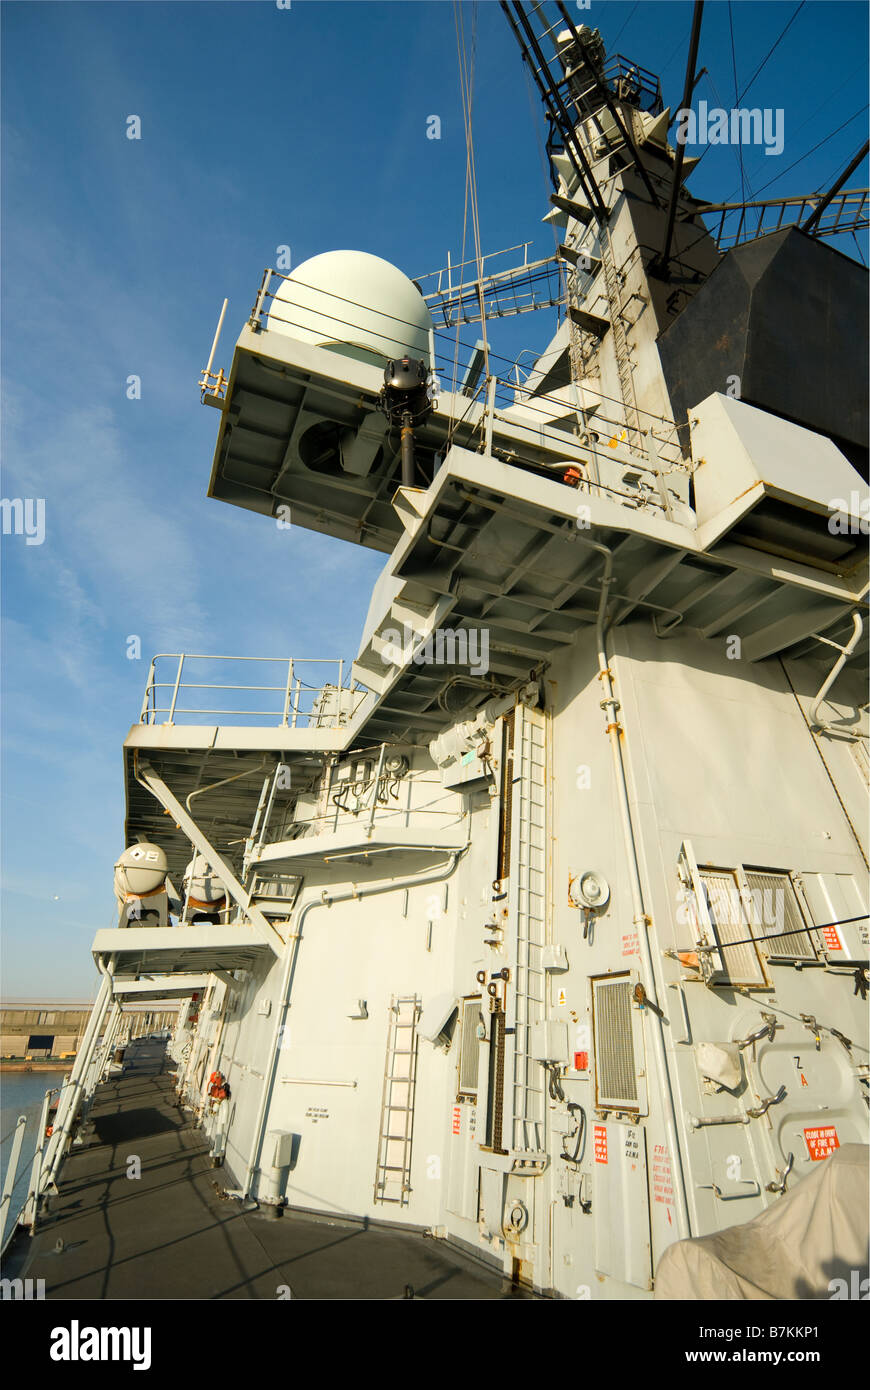 Aerials and radar on Royal Navy Ship Stock Photo